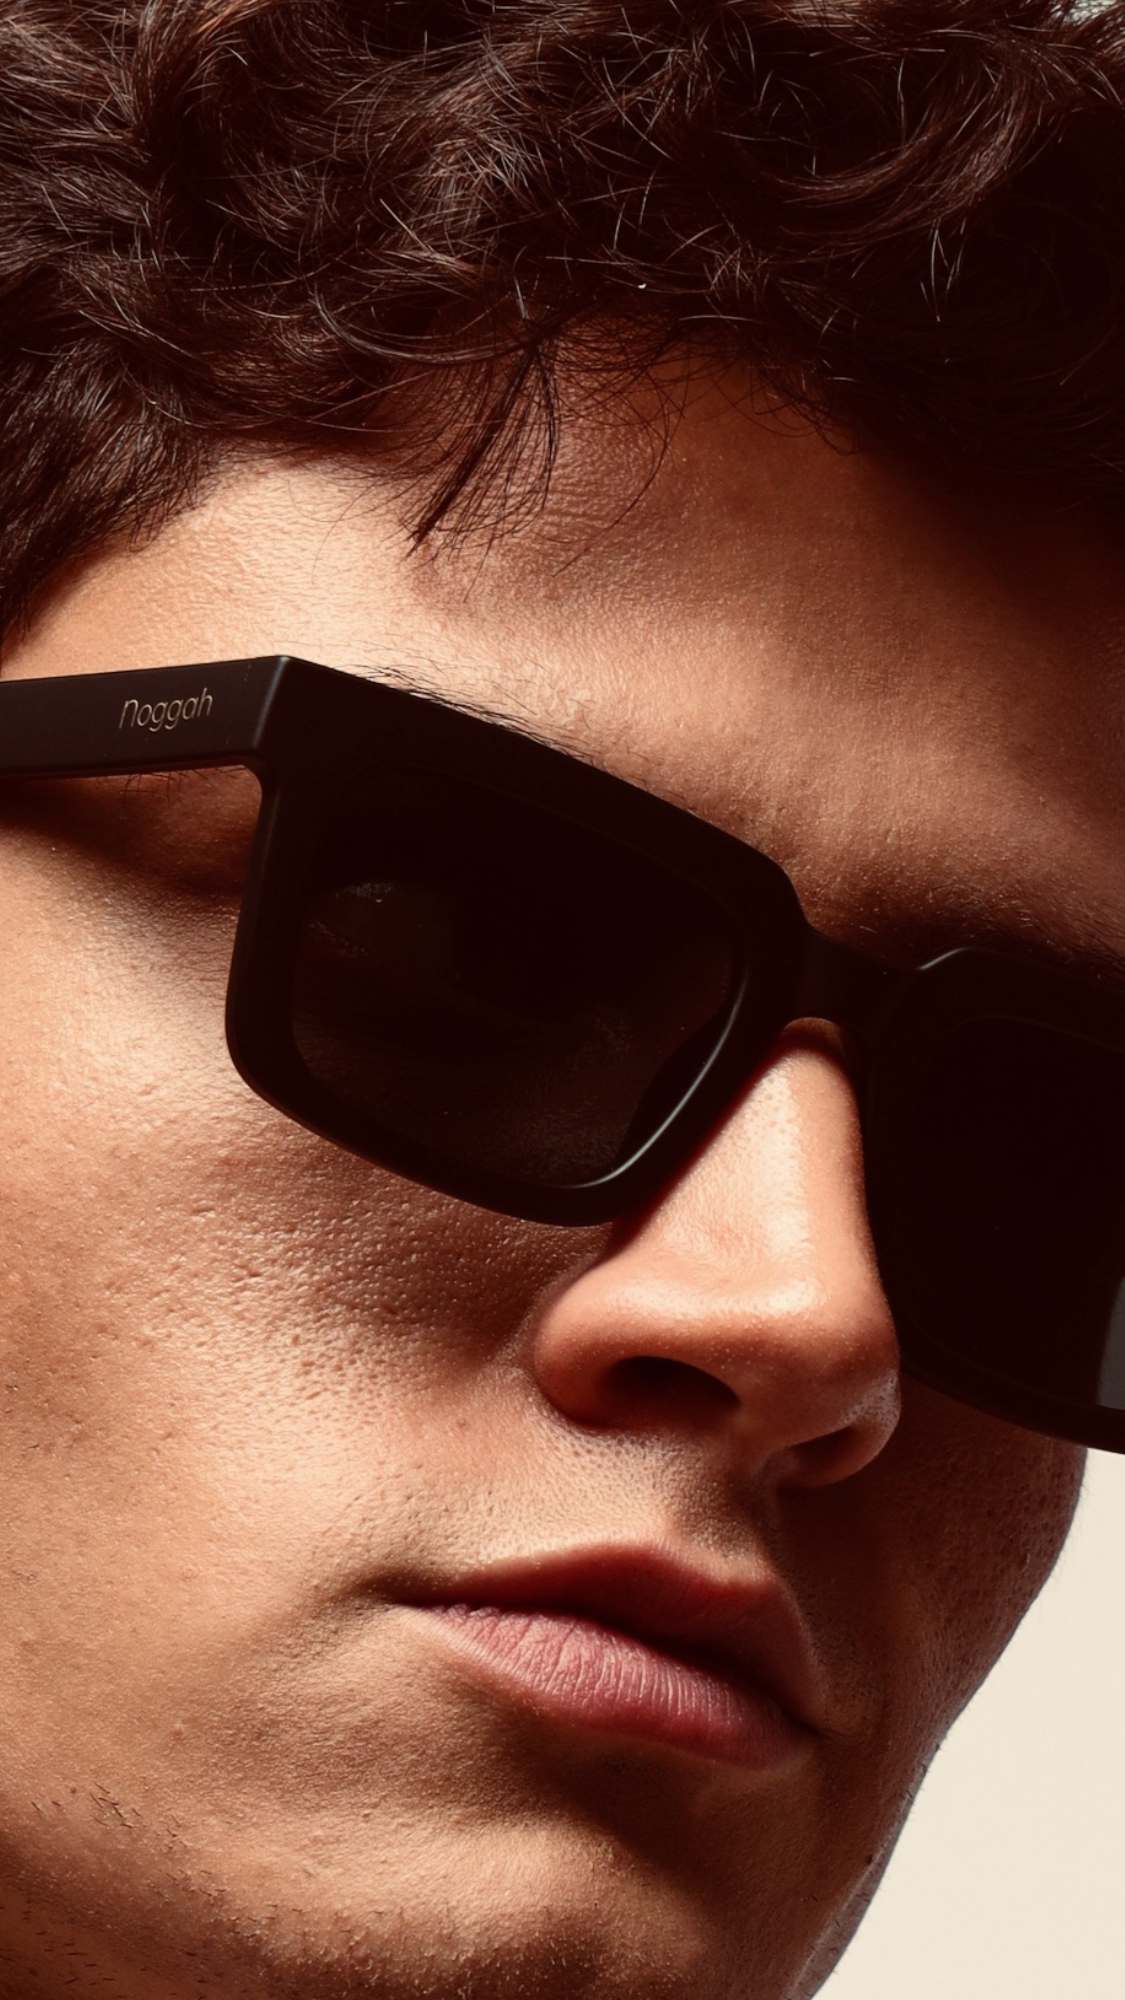 Noggah Sunglasses offers a premium selection of sunglasses.